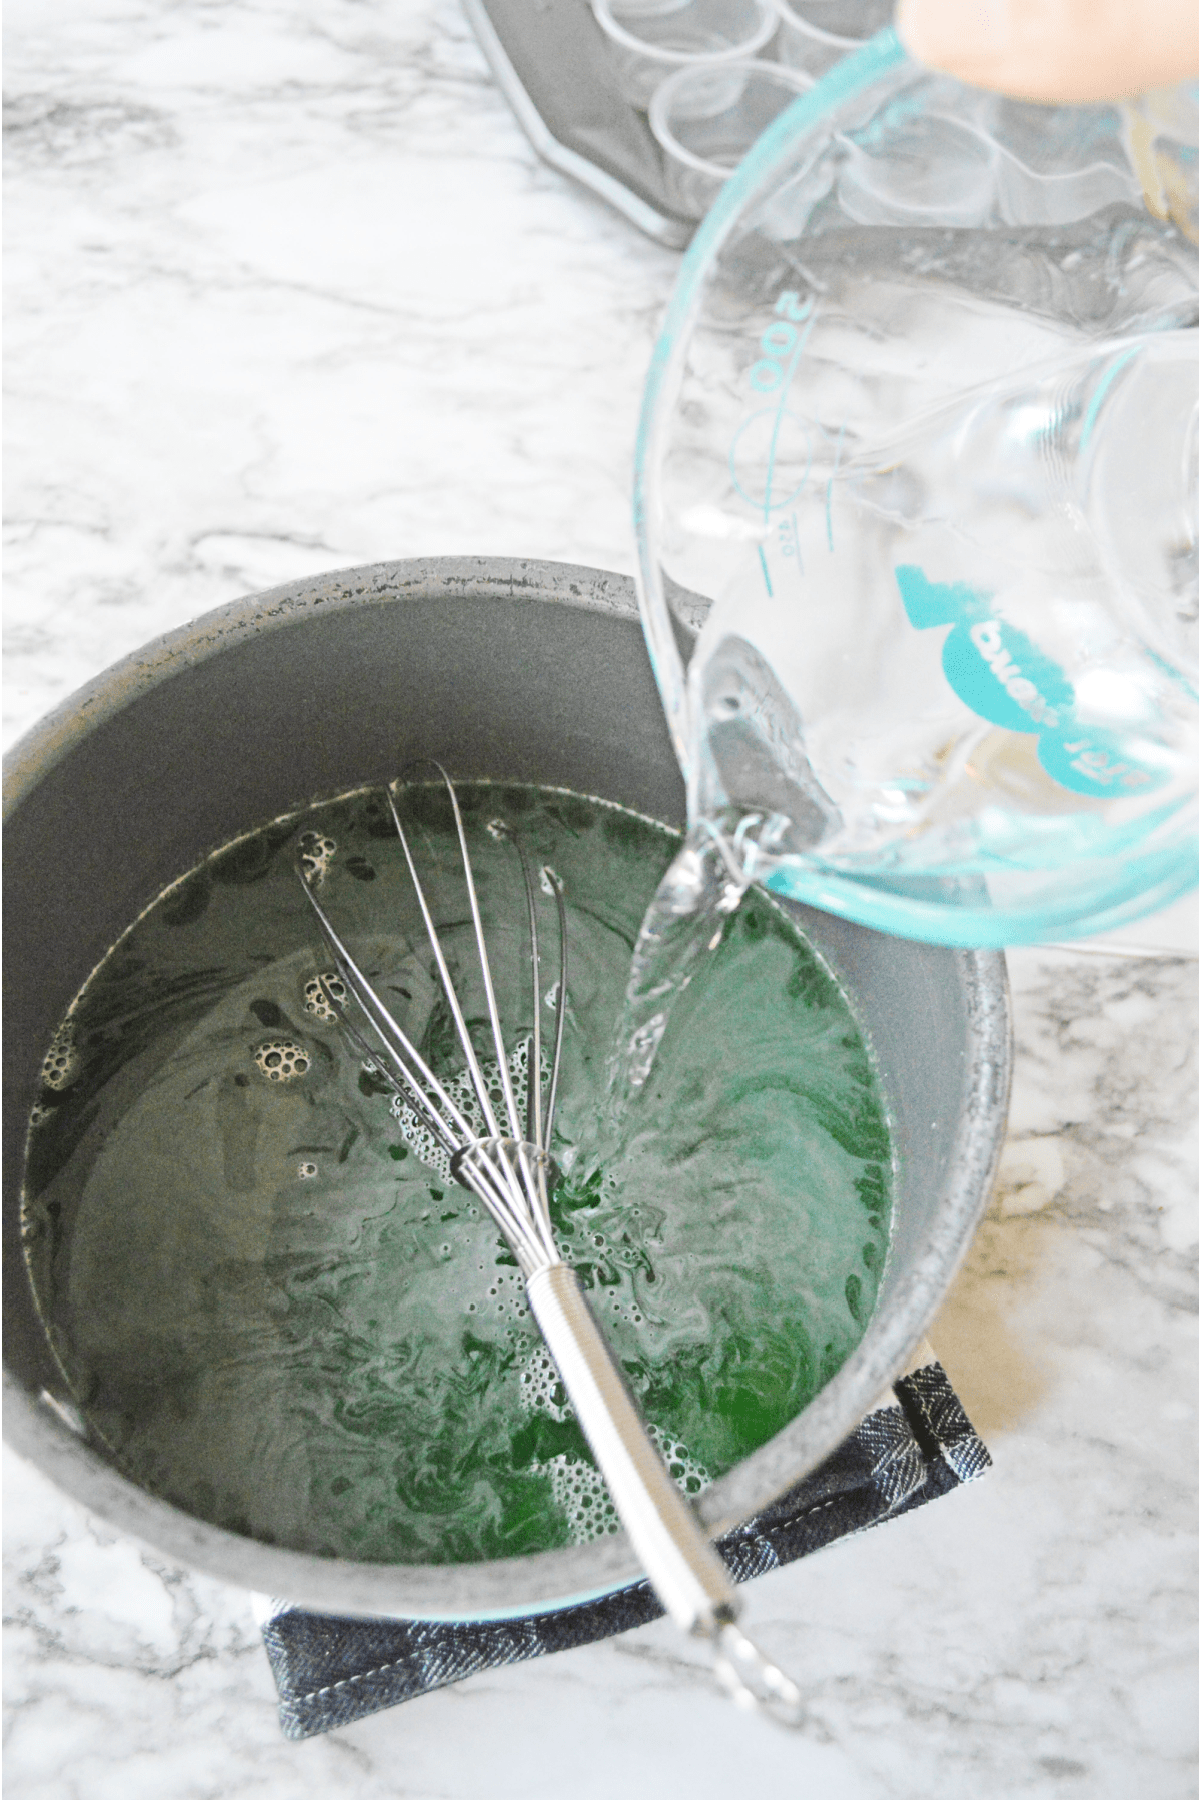 Pouring vodka into saucepan